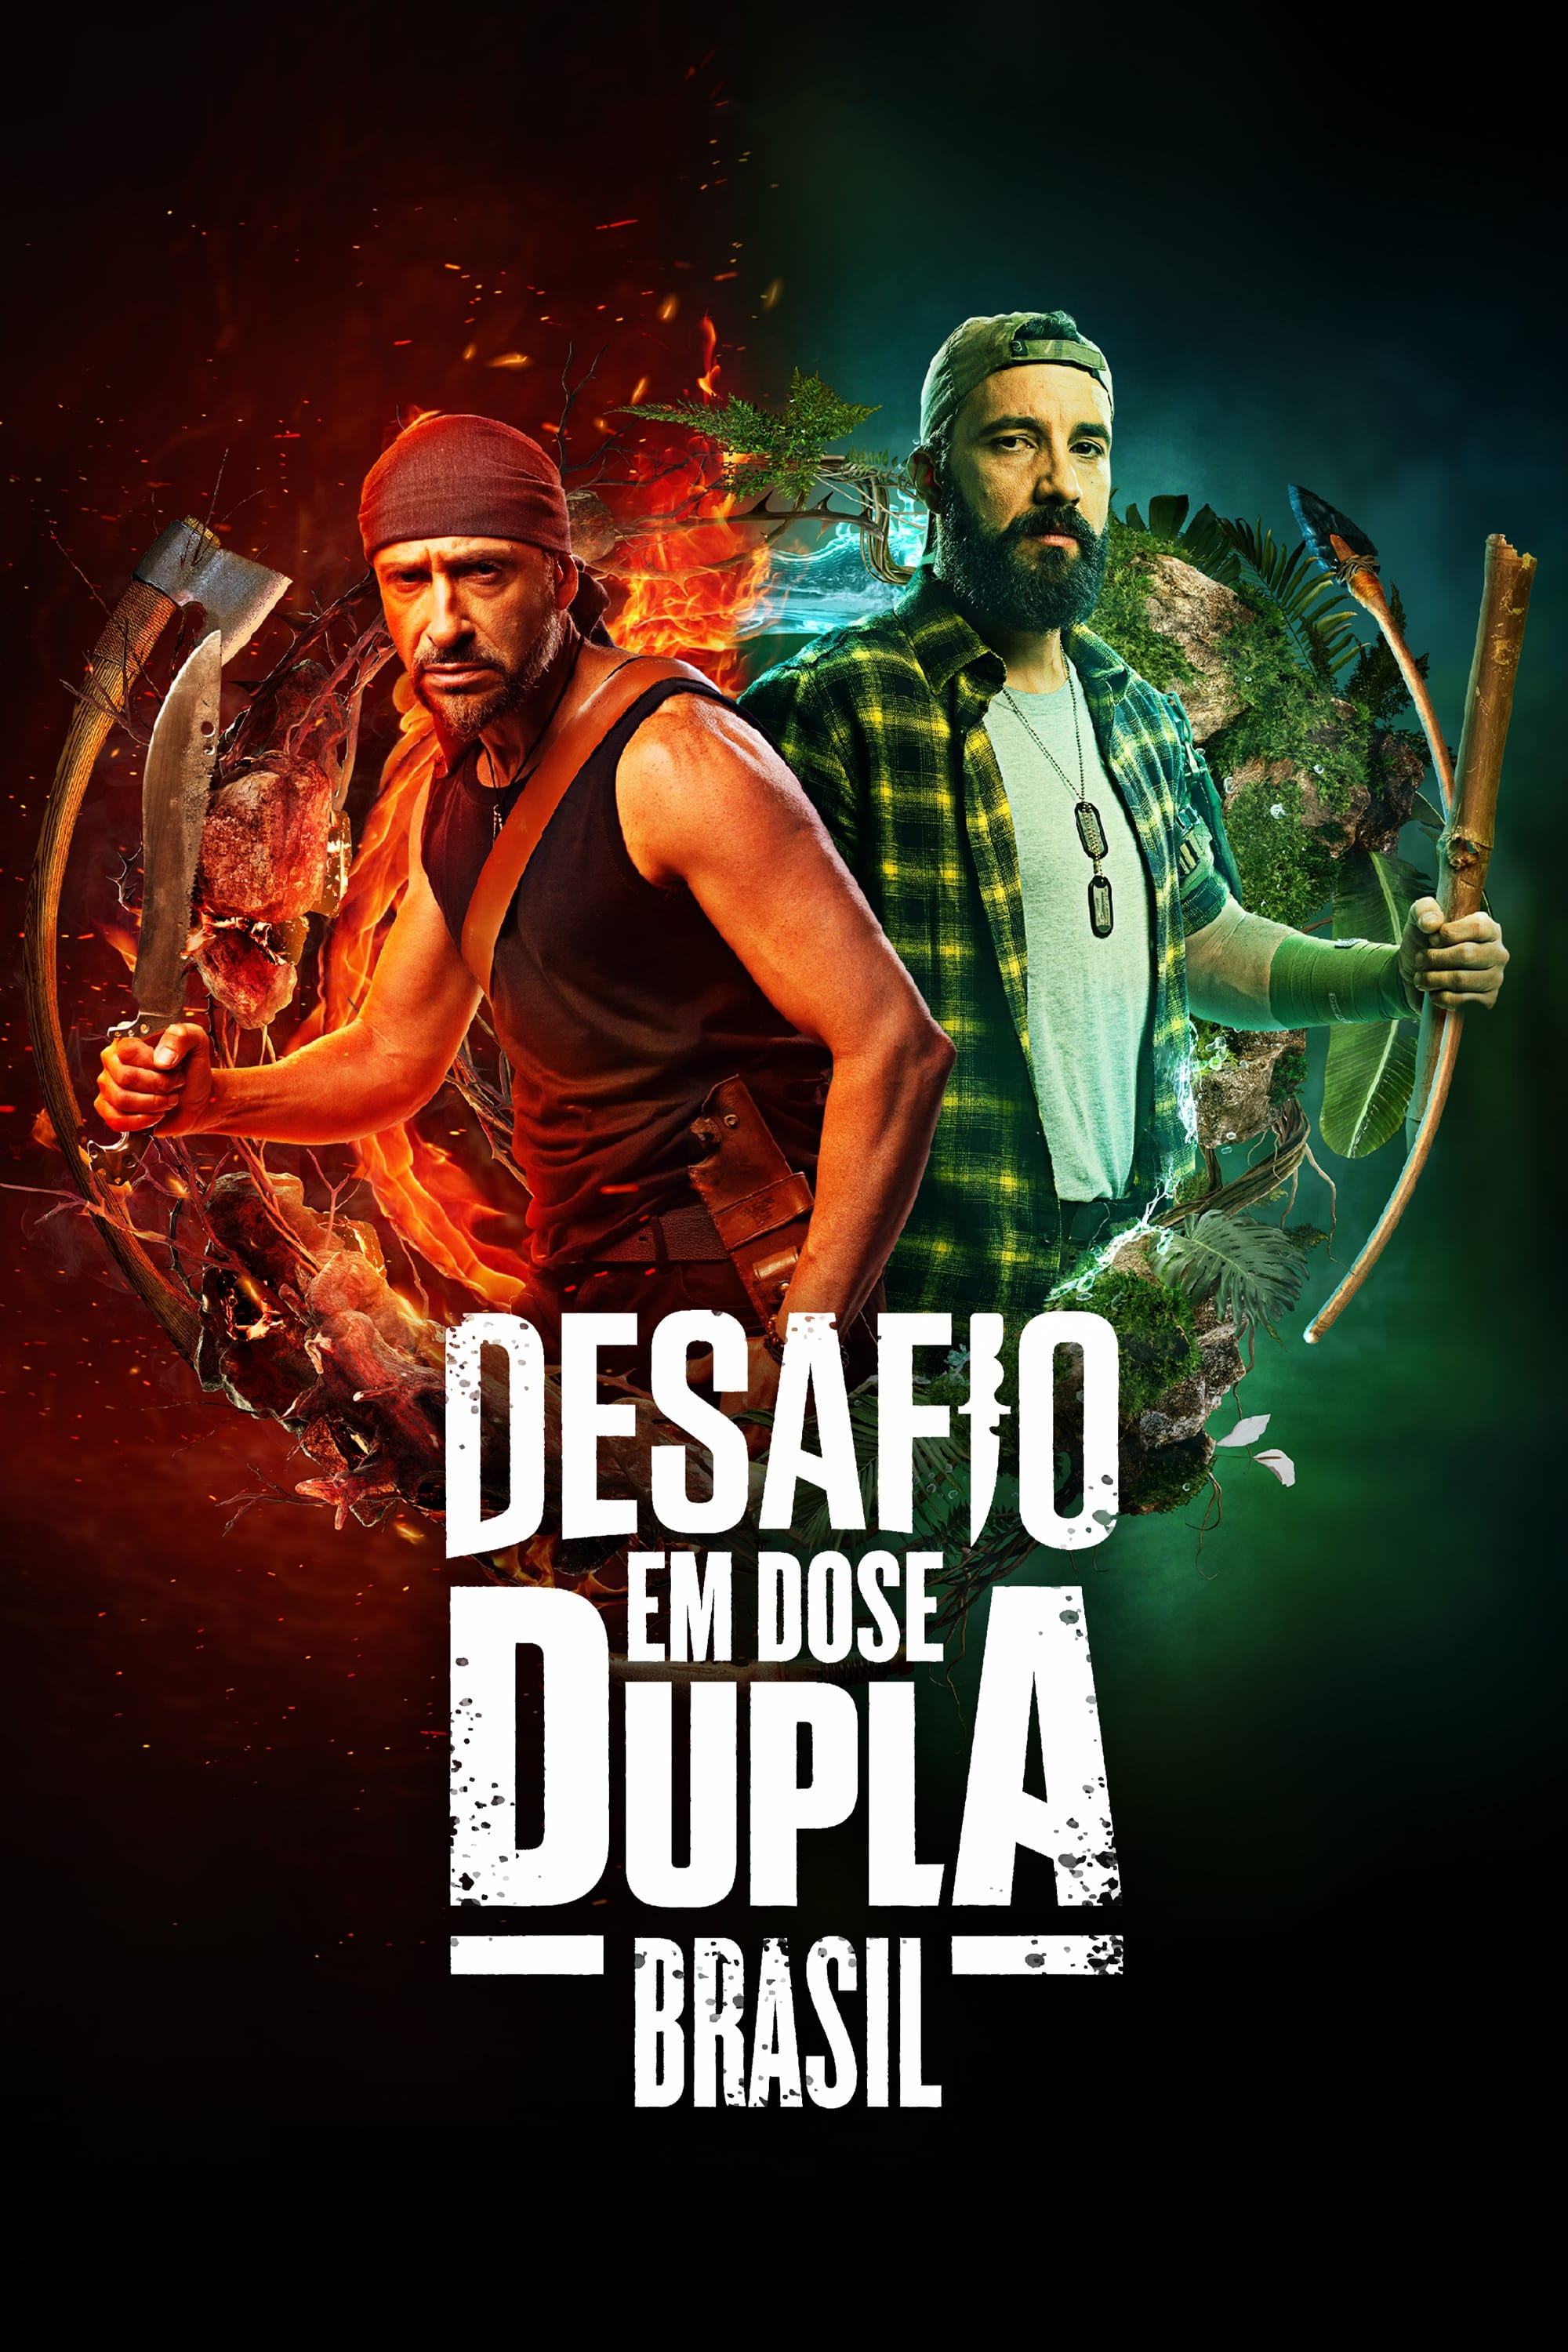 TV ratings for Dual Survival Brazil (Desafio Em Dose Dupla Brasil) in France. Discovery+ TV series